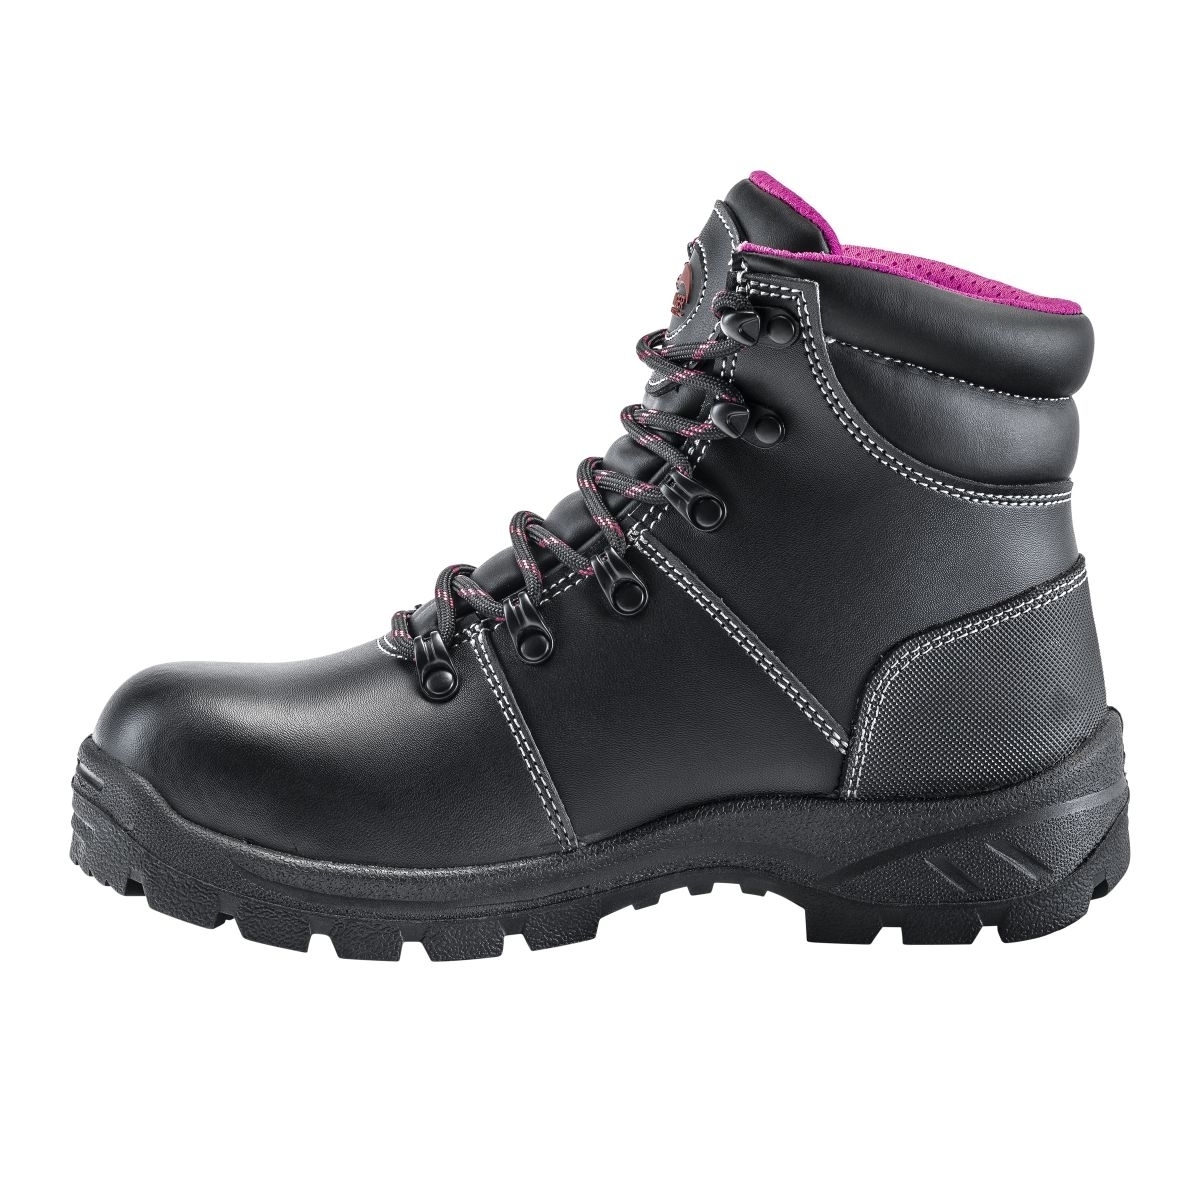 FSI FOOTWEAR SPECIALTIES INTERNATIONAL NAUTILUS Avenger Women's 6 Builder Steel Toe Waterproof EH Work Boots Black - A8124 BLACK - BLACK, 1